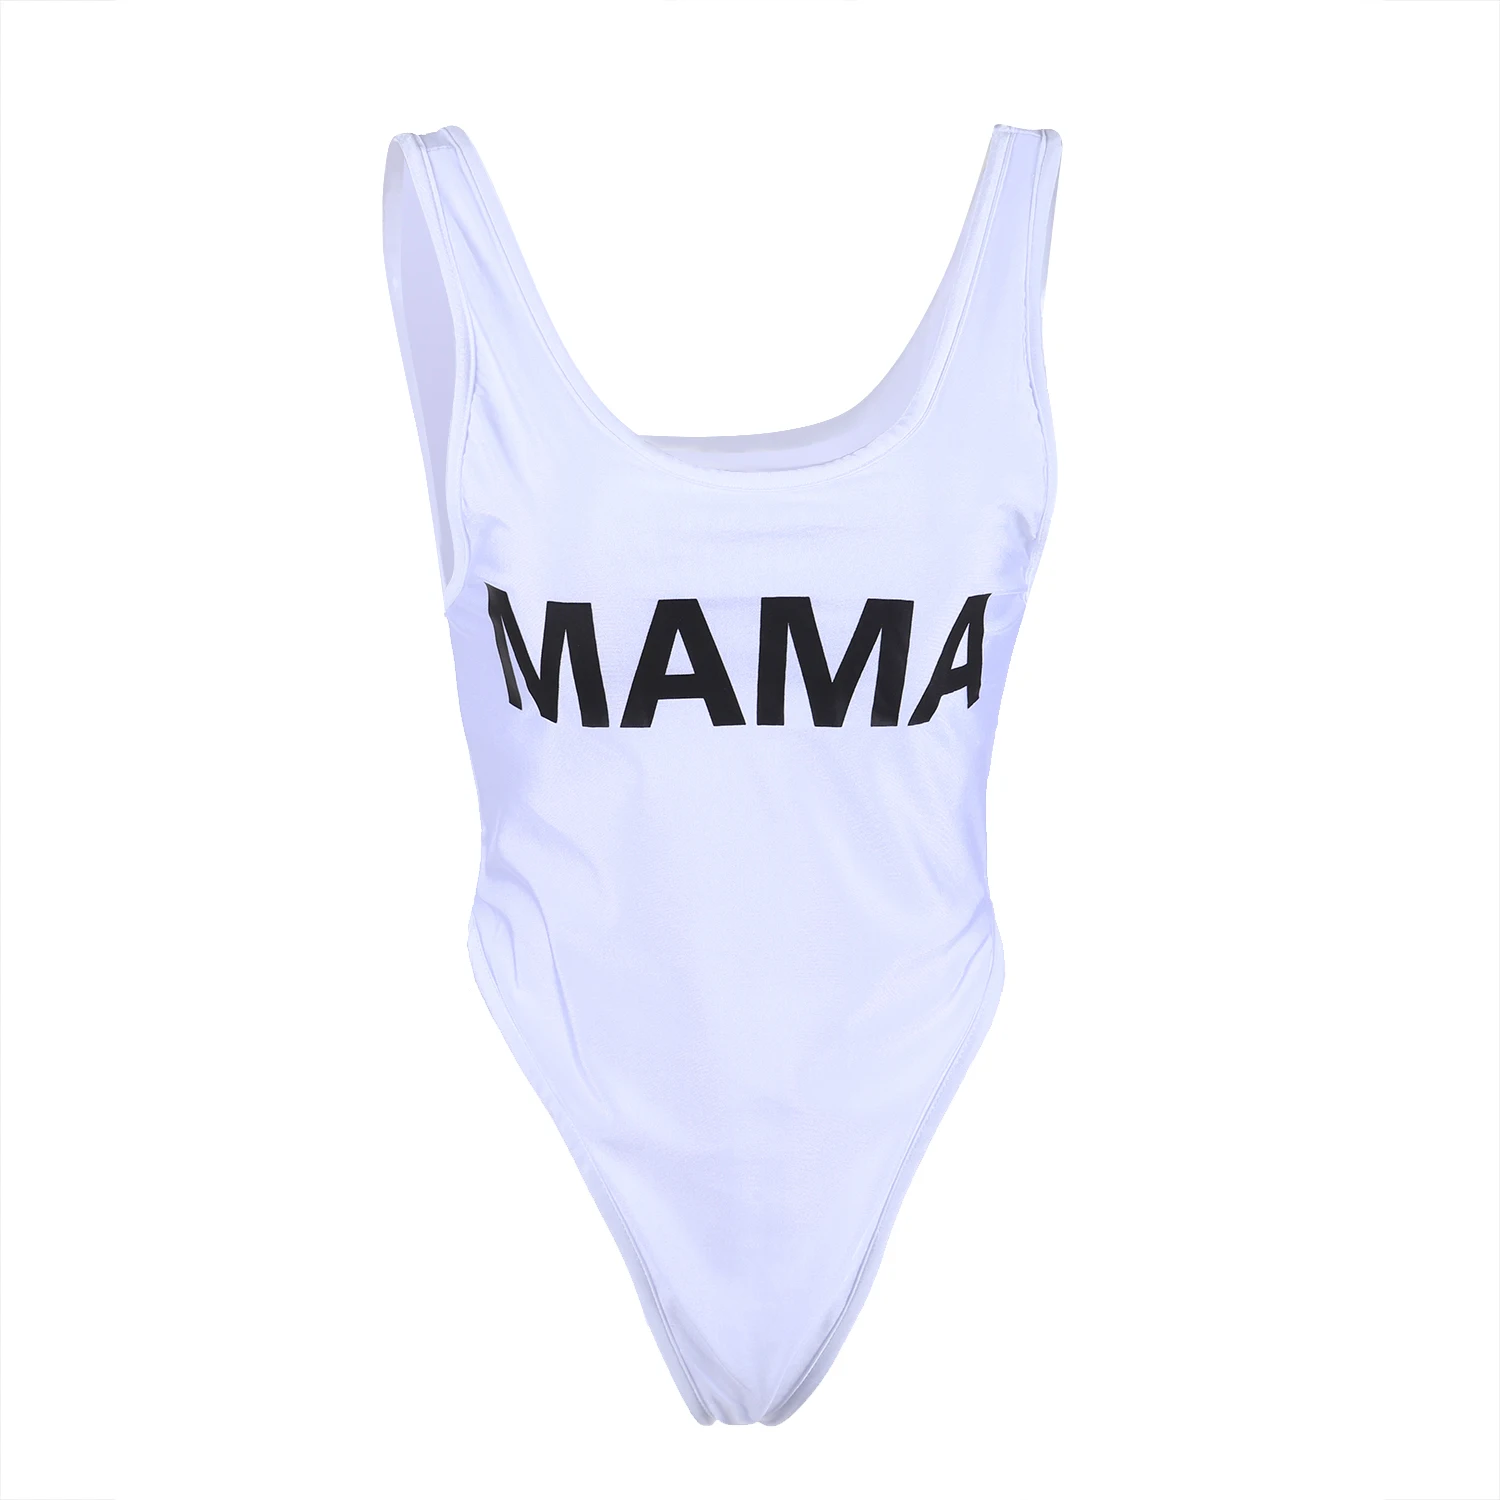 Fashion Mother and Daughter White Family Matching Bikini Swimsuit Women Kids Girls Swimwear Baby Clothes Sets 2-6T | Мать и ребенок